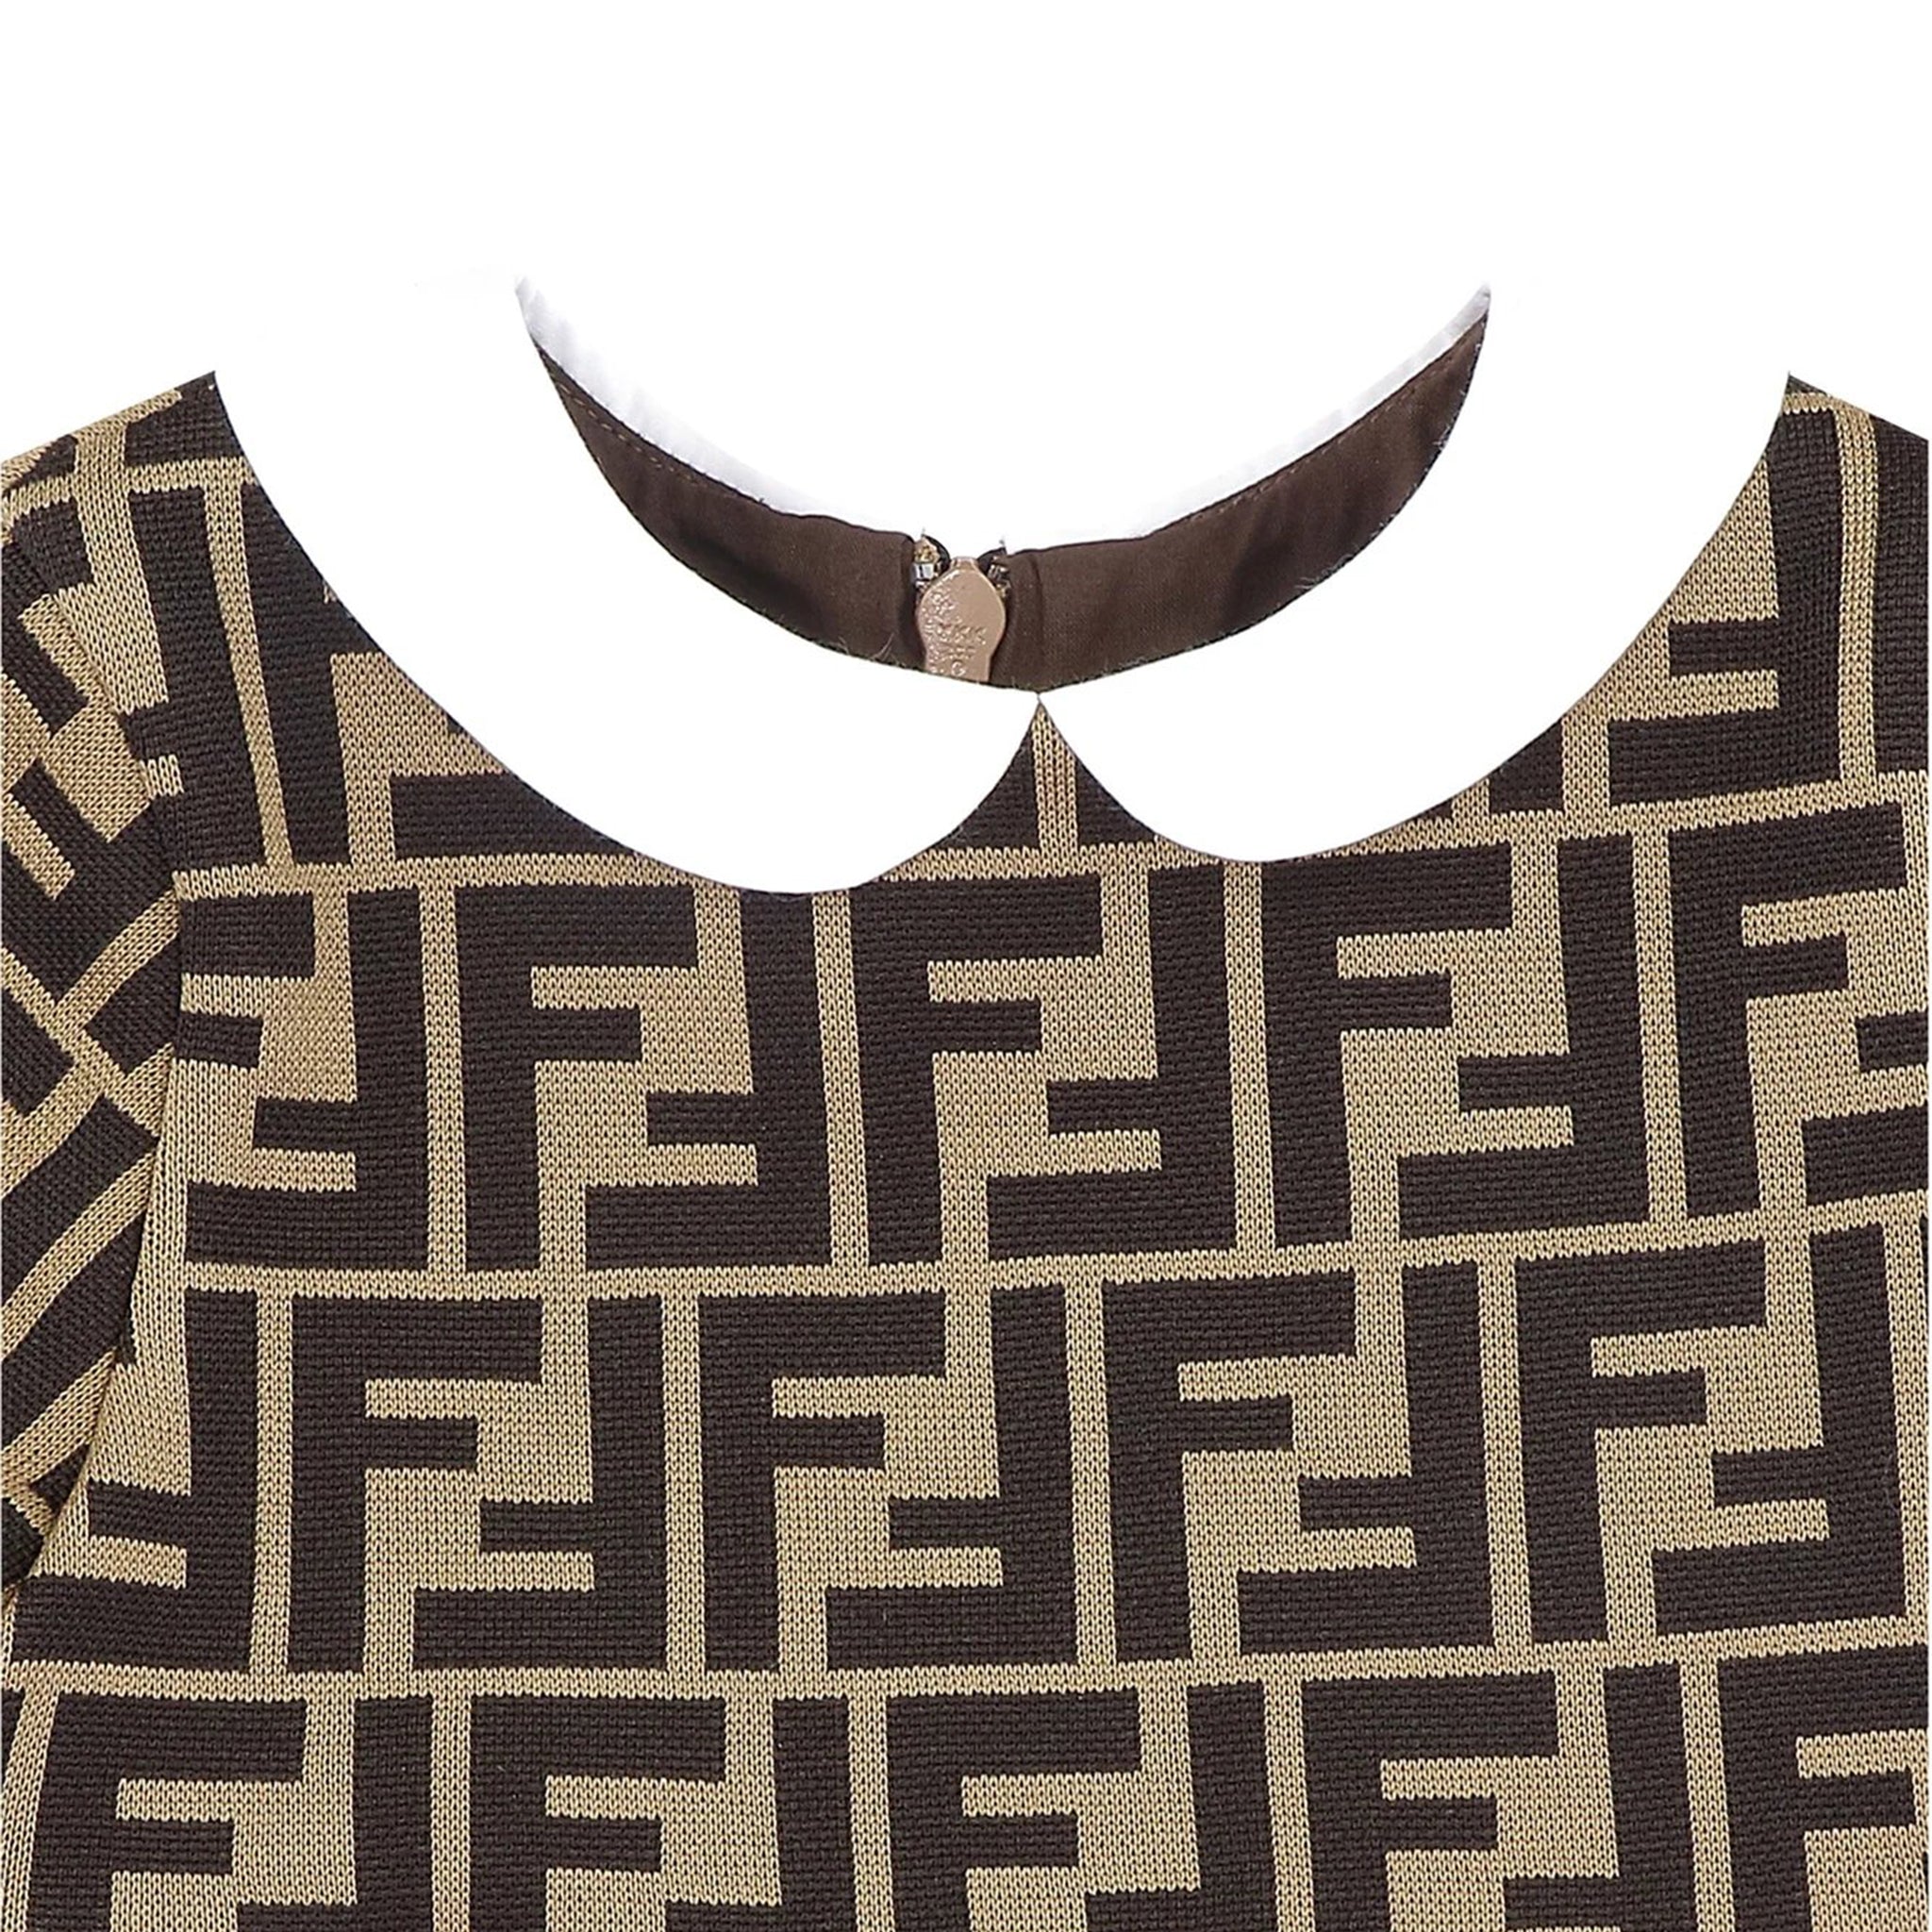 Fendi Baby Girls Collar Dress FF Print Brown